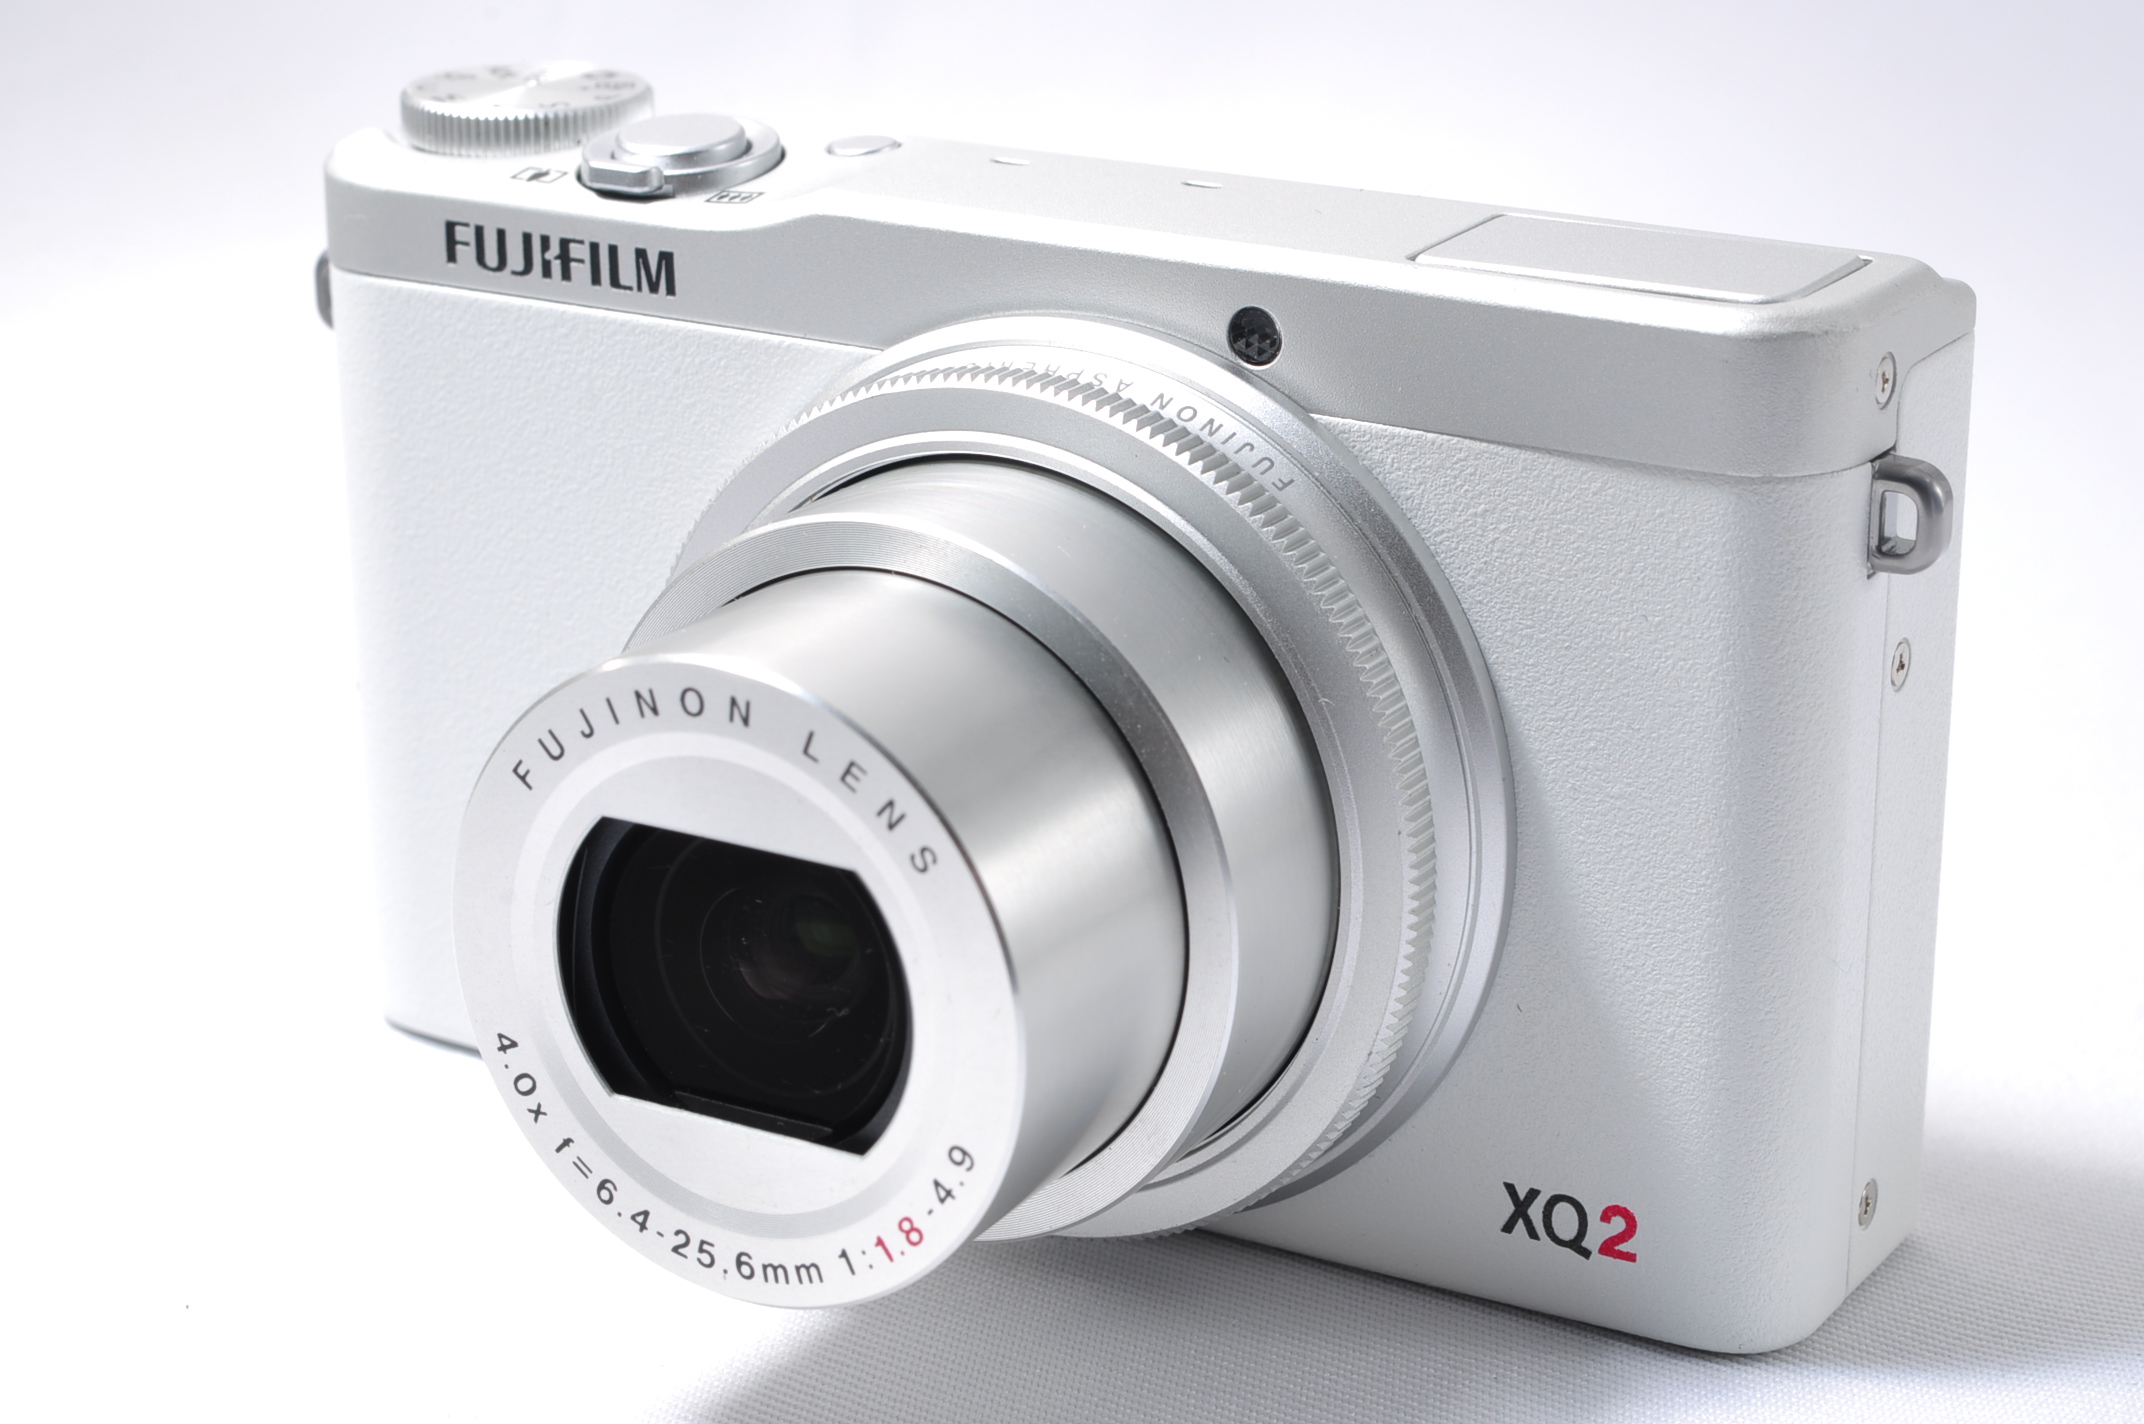 Leica ライカ D-LUX7 大型センサー搭載デジタルカメラ : leica-d-lux7 